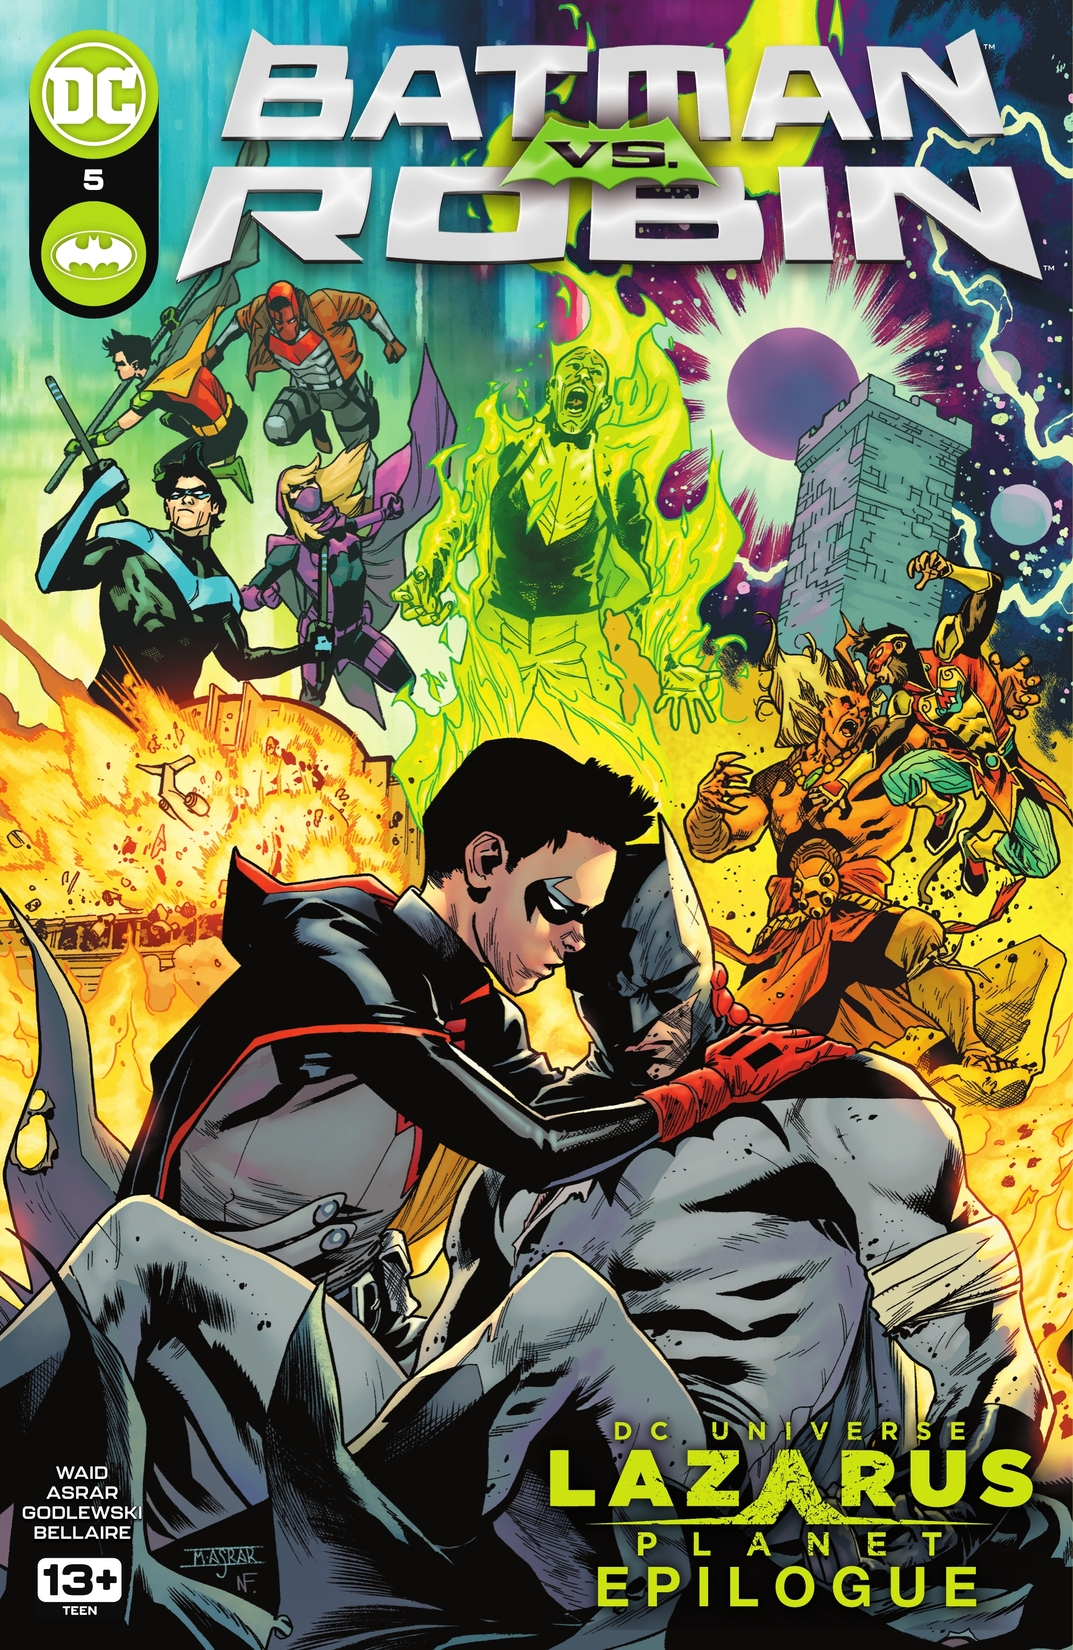 Batman vs. Robin #5 preview images